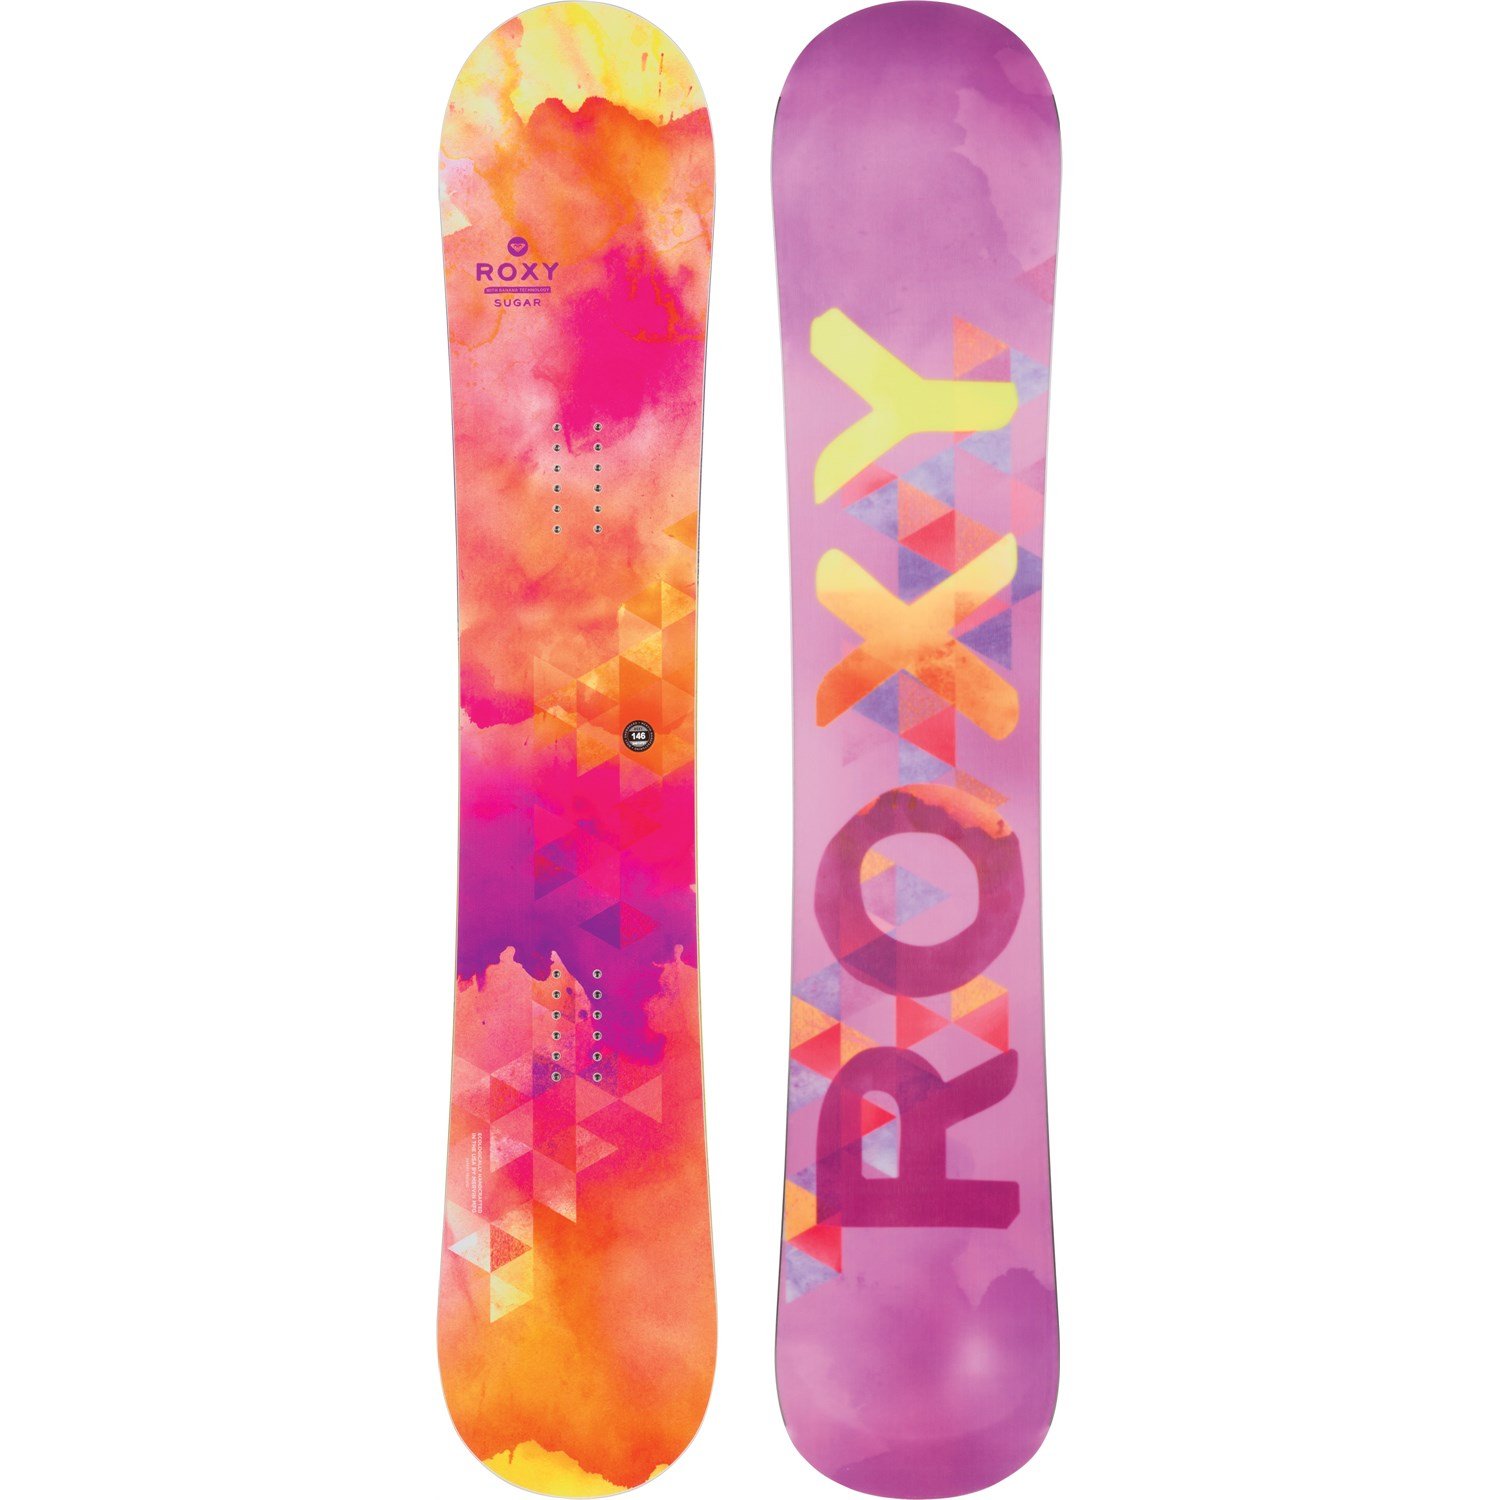 Zwitsers mengen Dijk Roxy Sugar Banana Watercolor Snowboard - Women's 2015 | evo